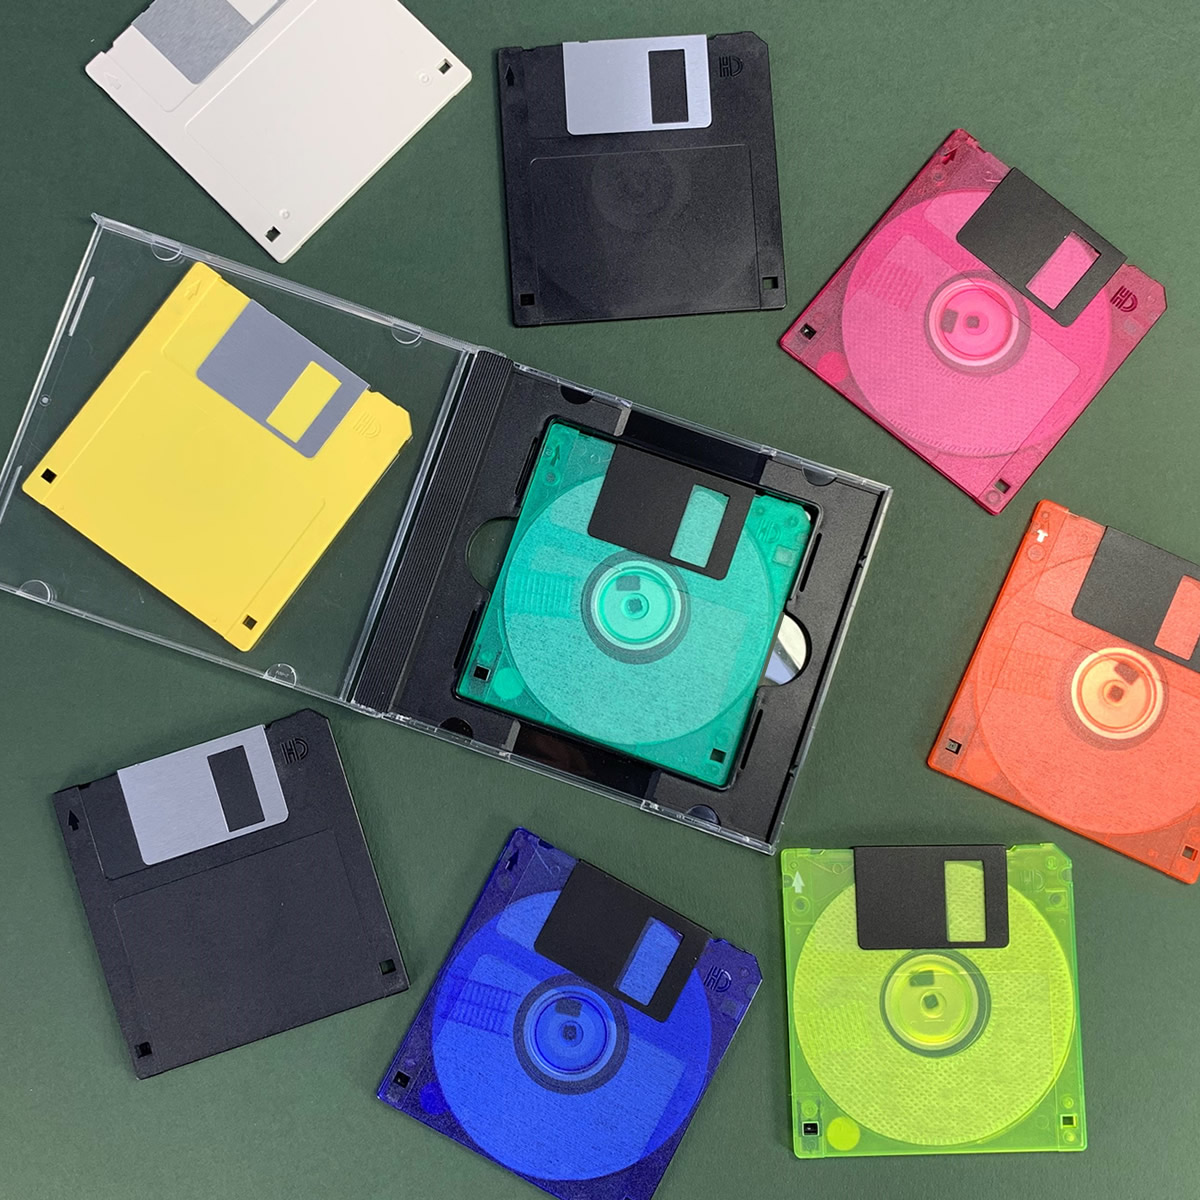 3.5 inch Floppy Disks